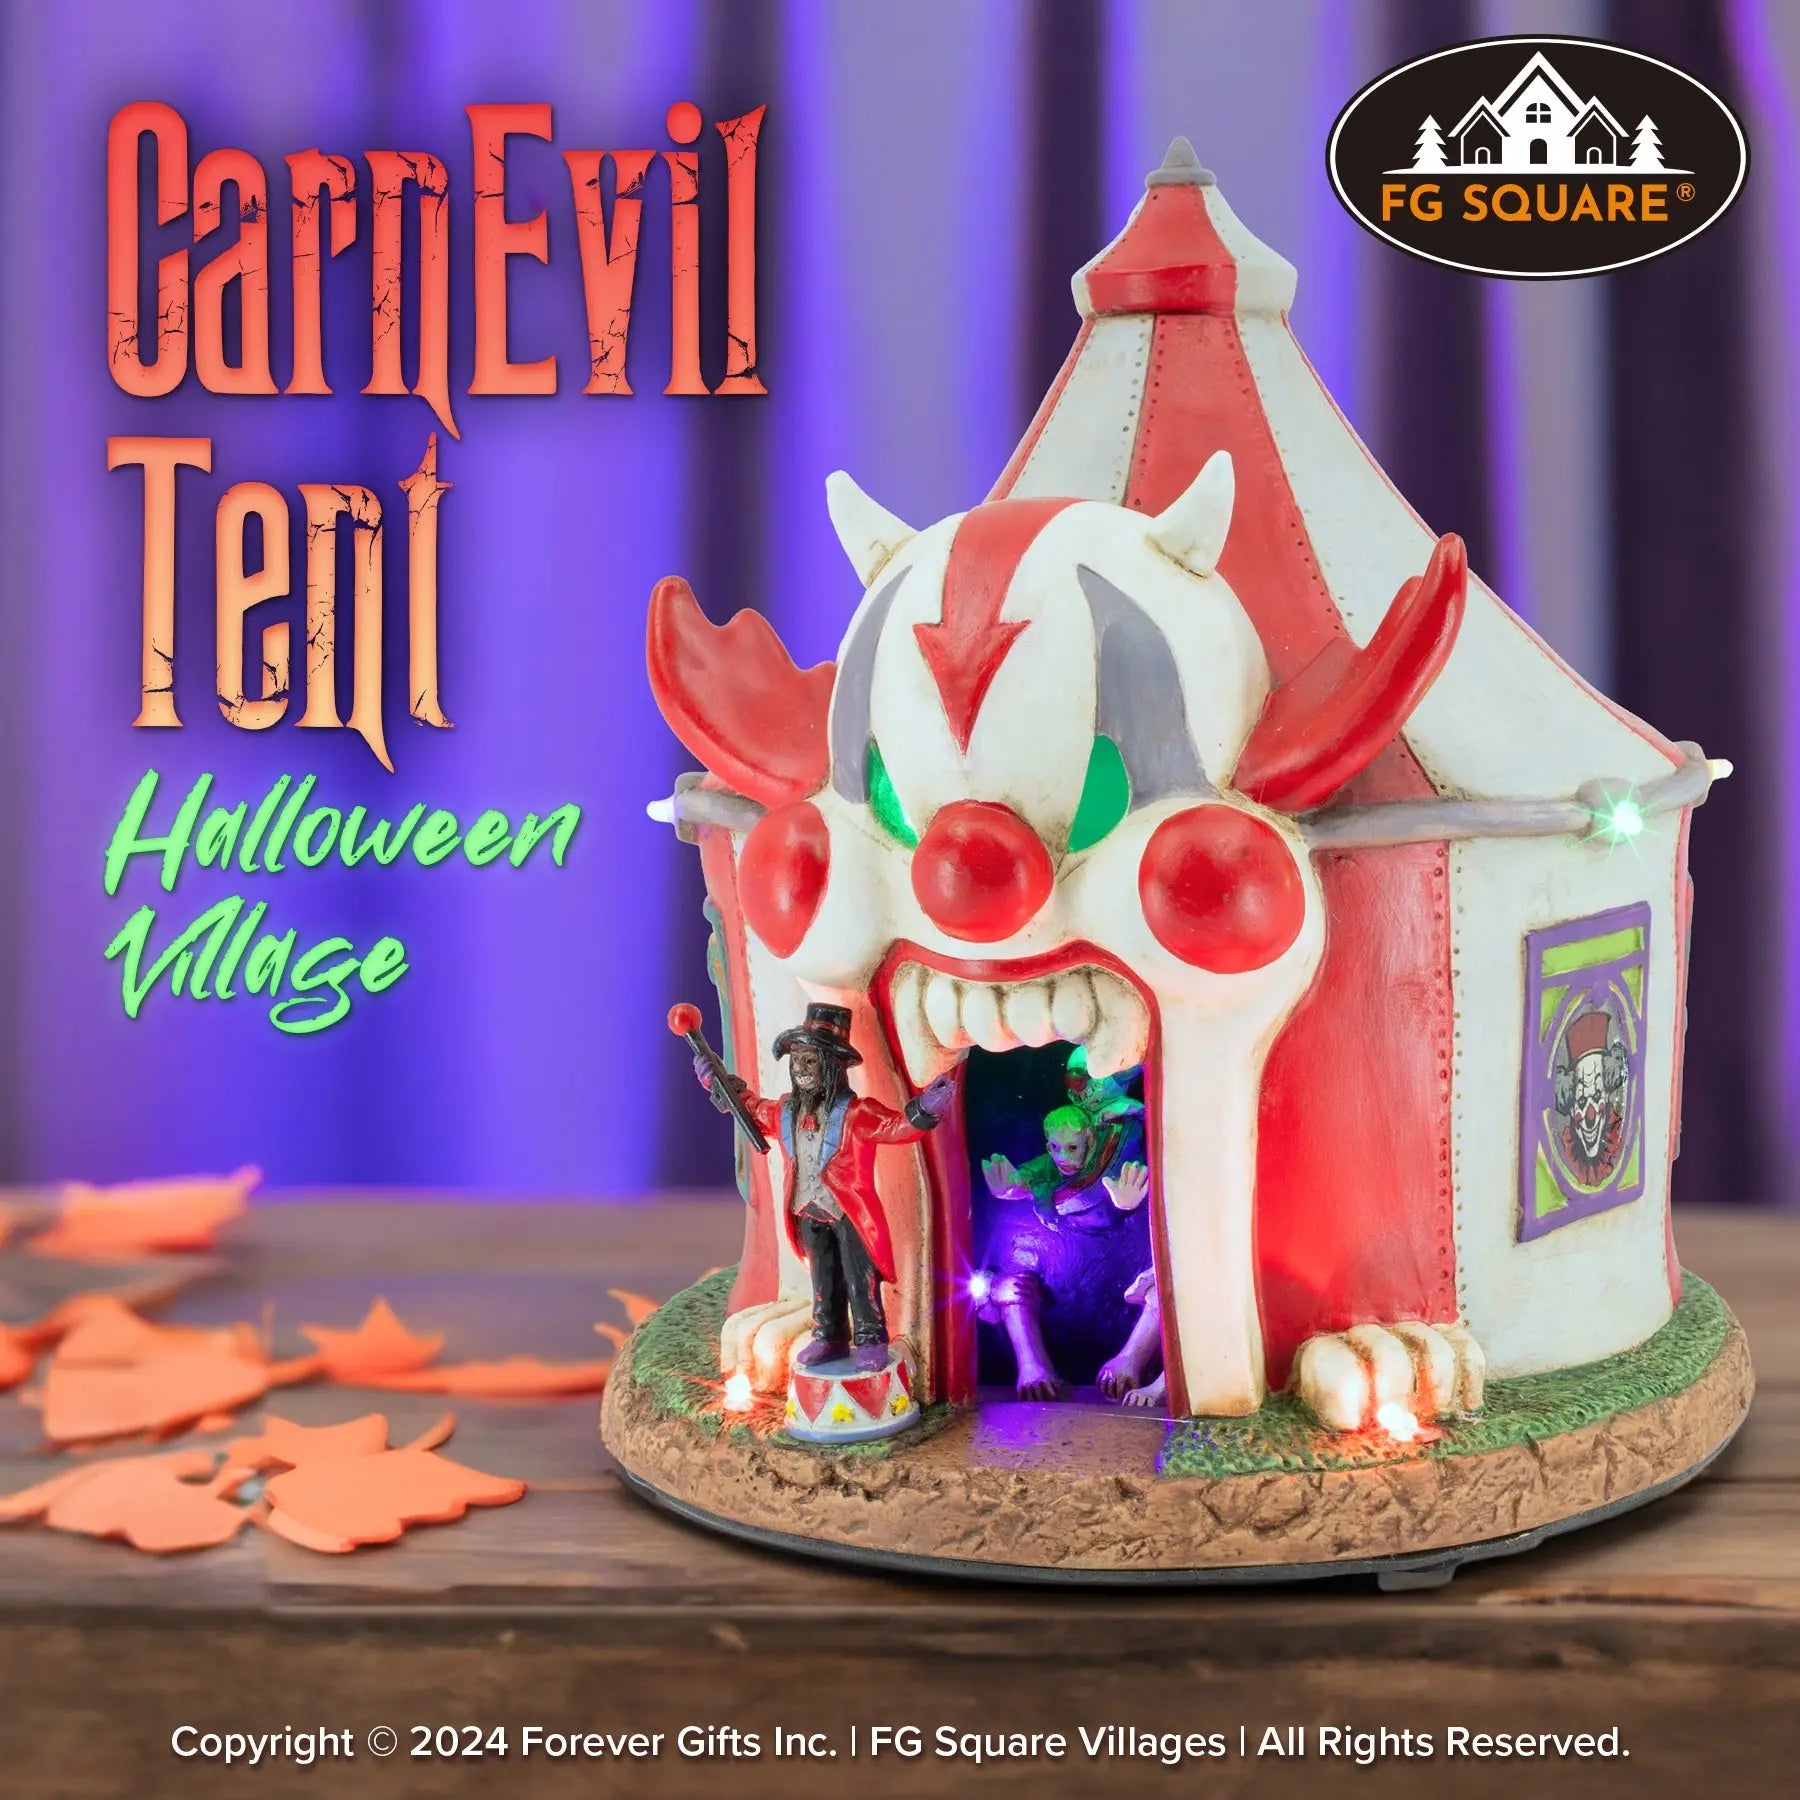 CarnEvil Tent ShopFGI